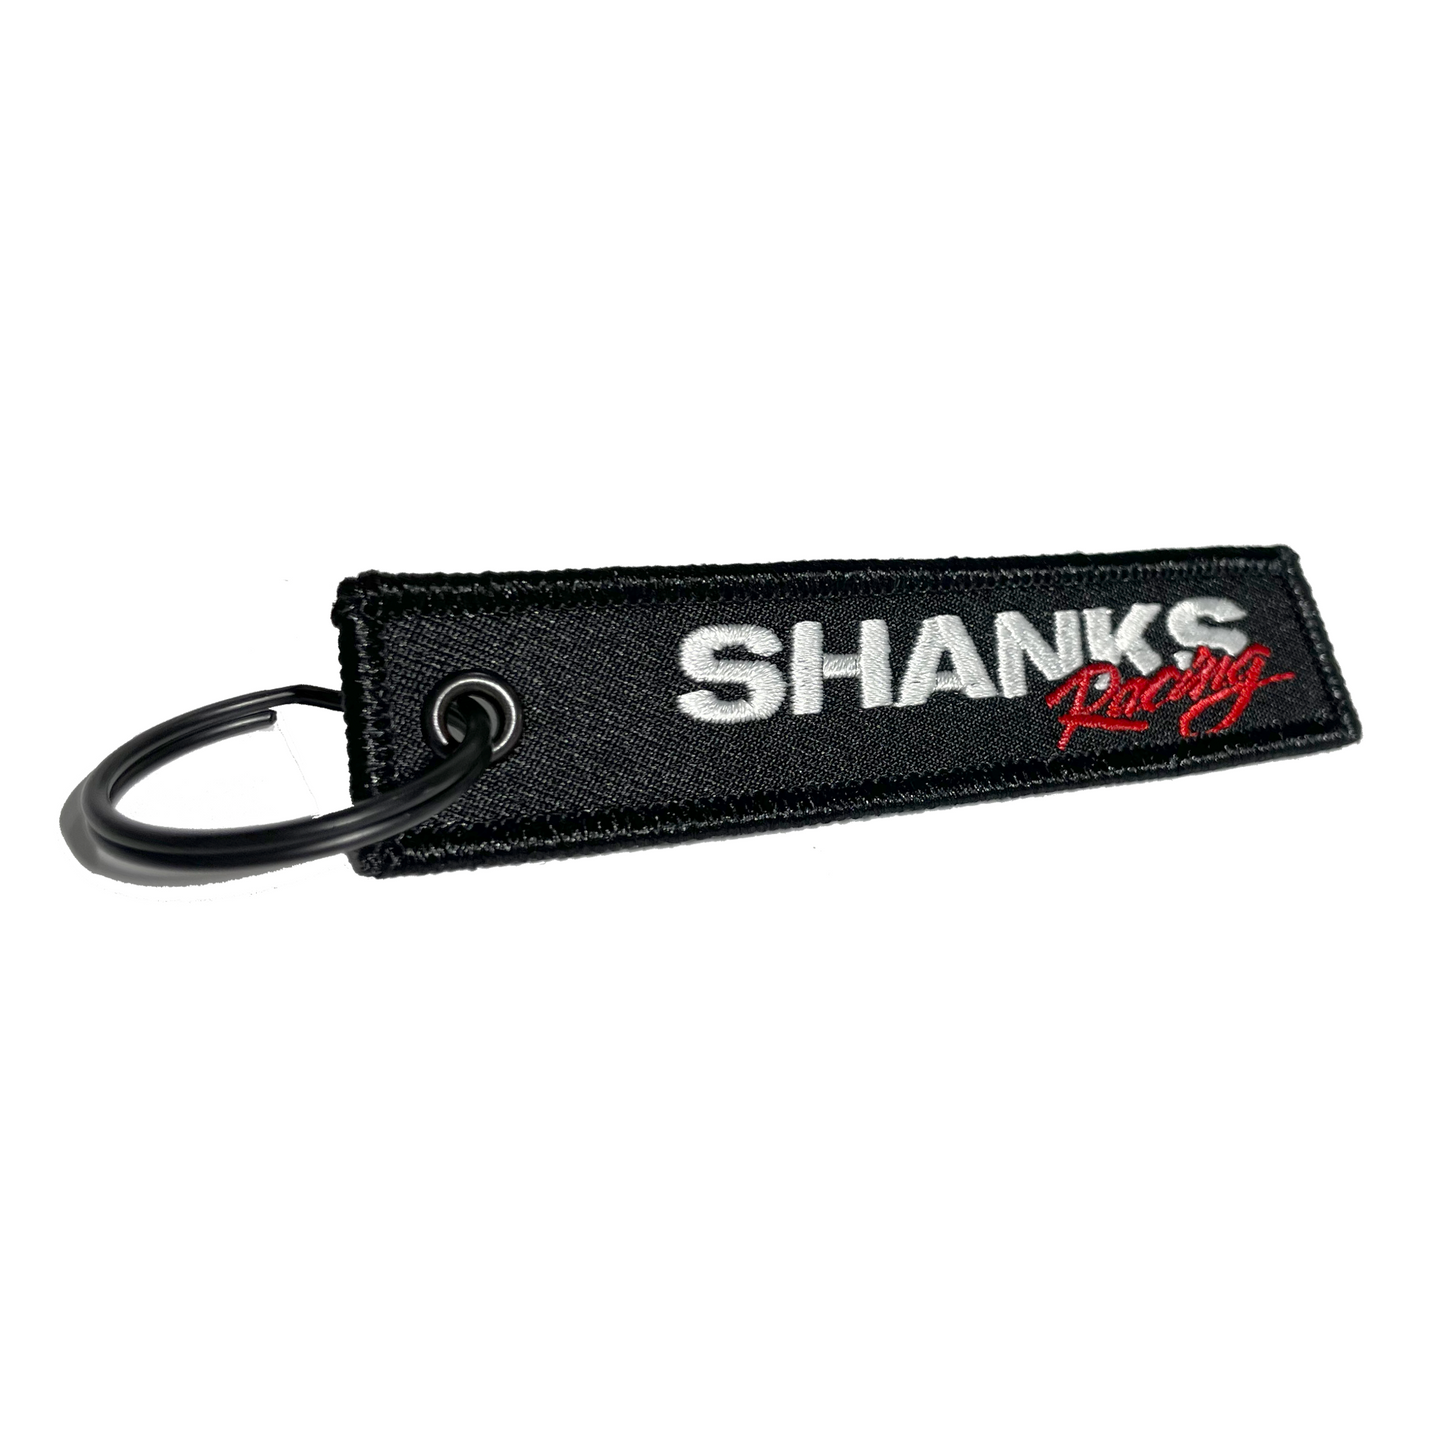 Shanks Racing Jet Tag - Black